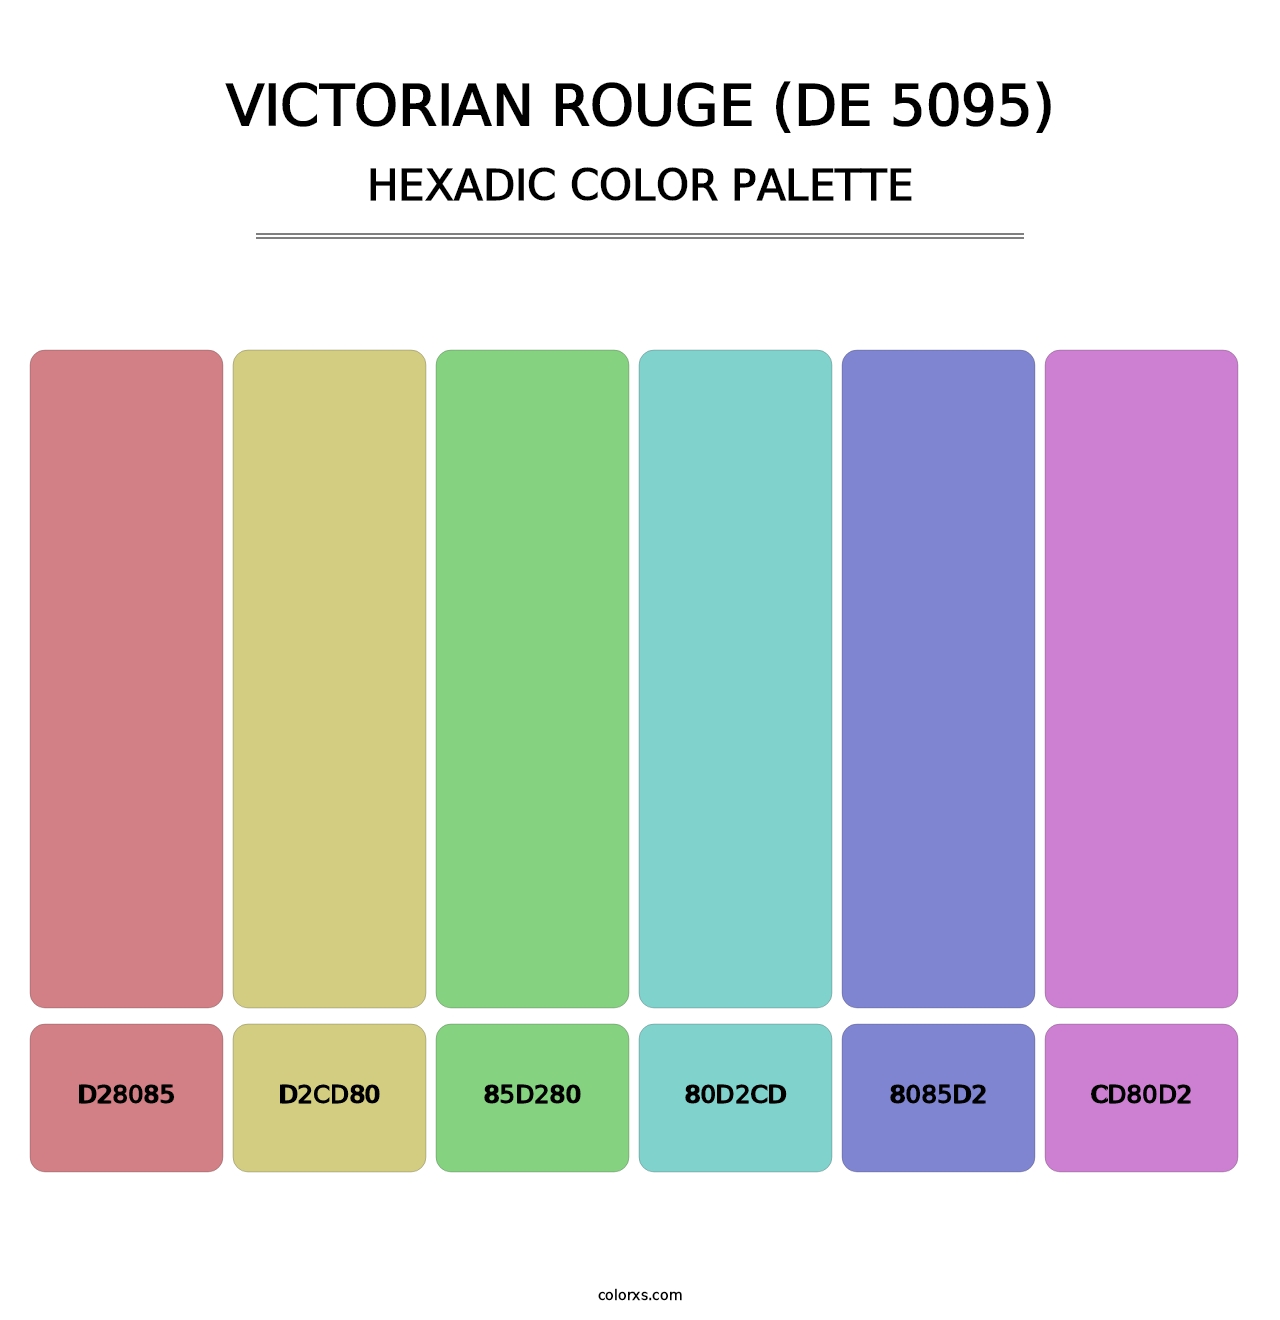 Victorian Rouge (DE 5095) - Hexadic Color Palette